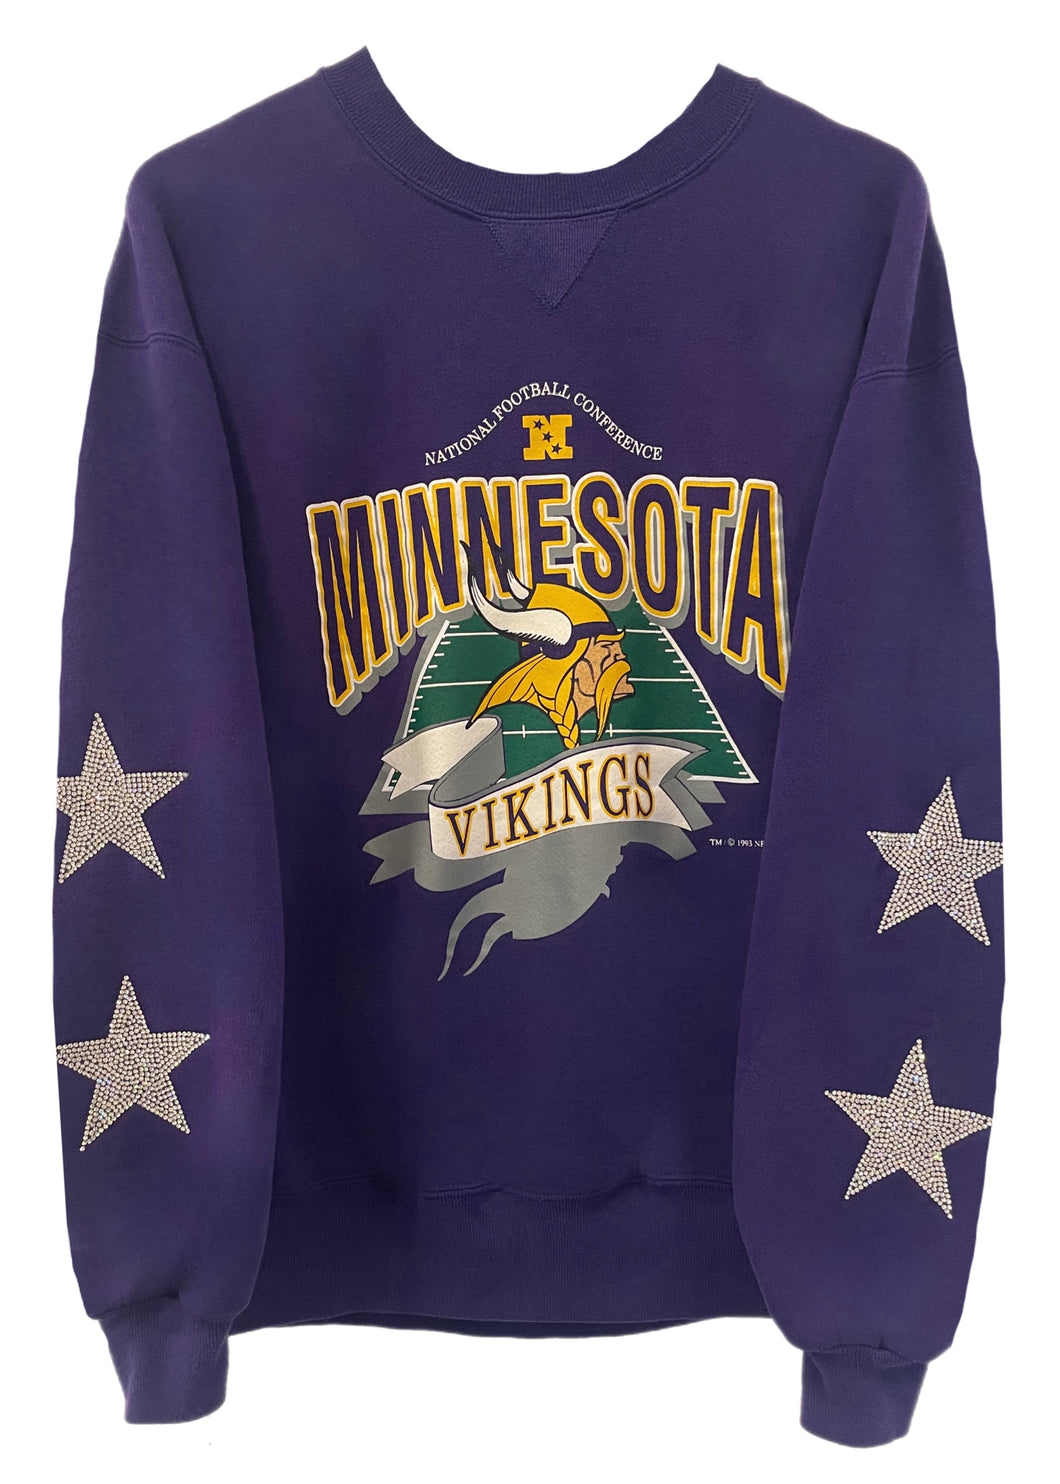 Minnesota Vikings, NFL One of a KIND Vintage Sweatshirt with Crystal Star Design, Custom Name + Number